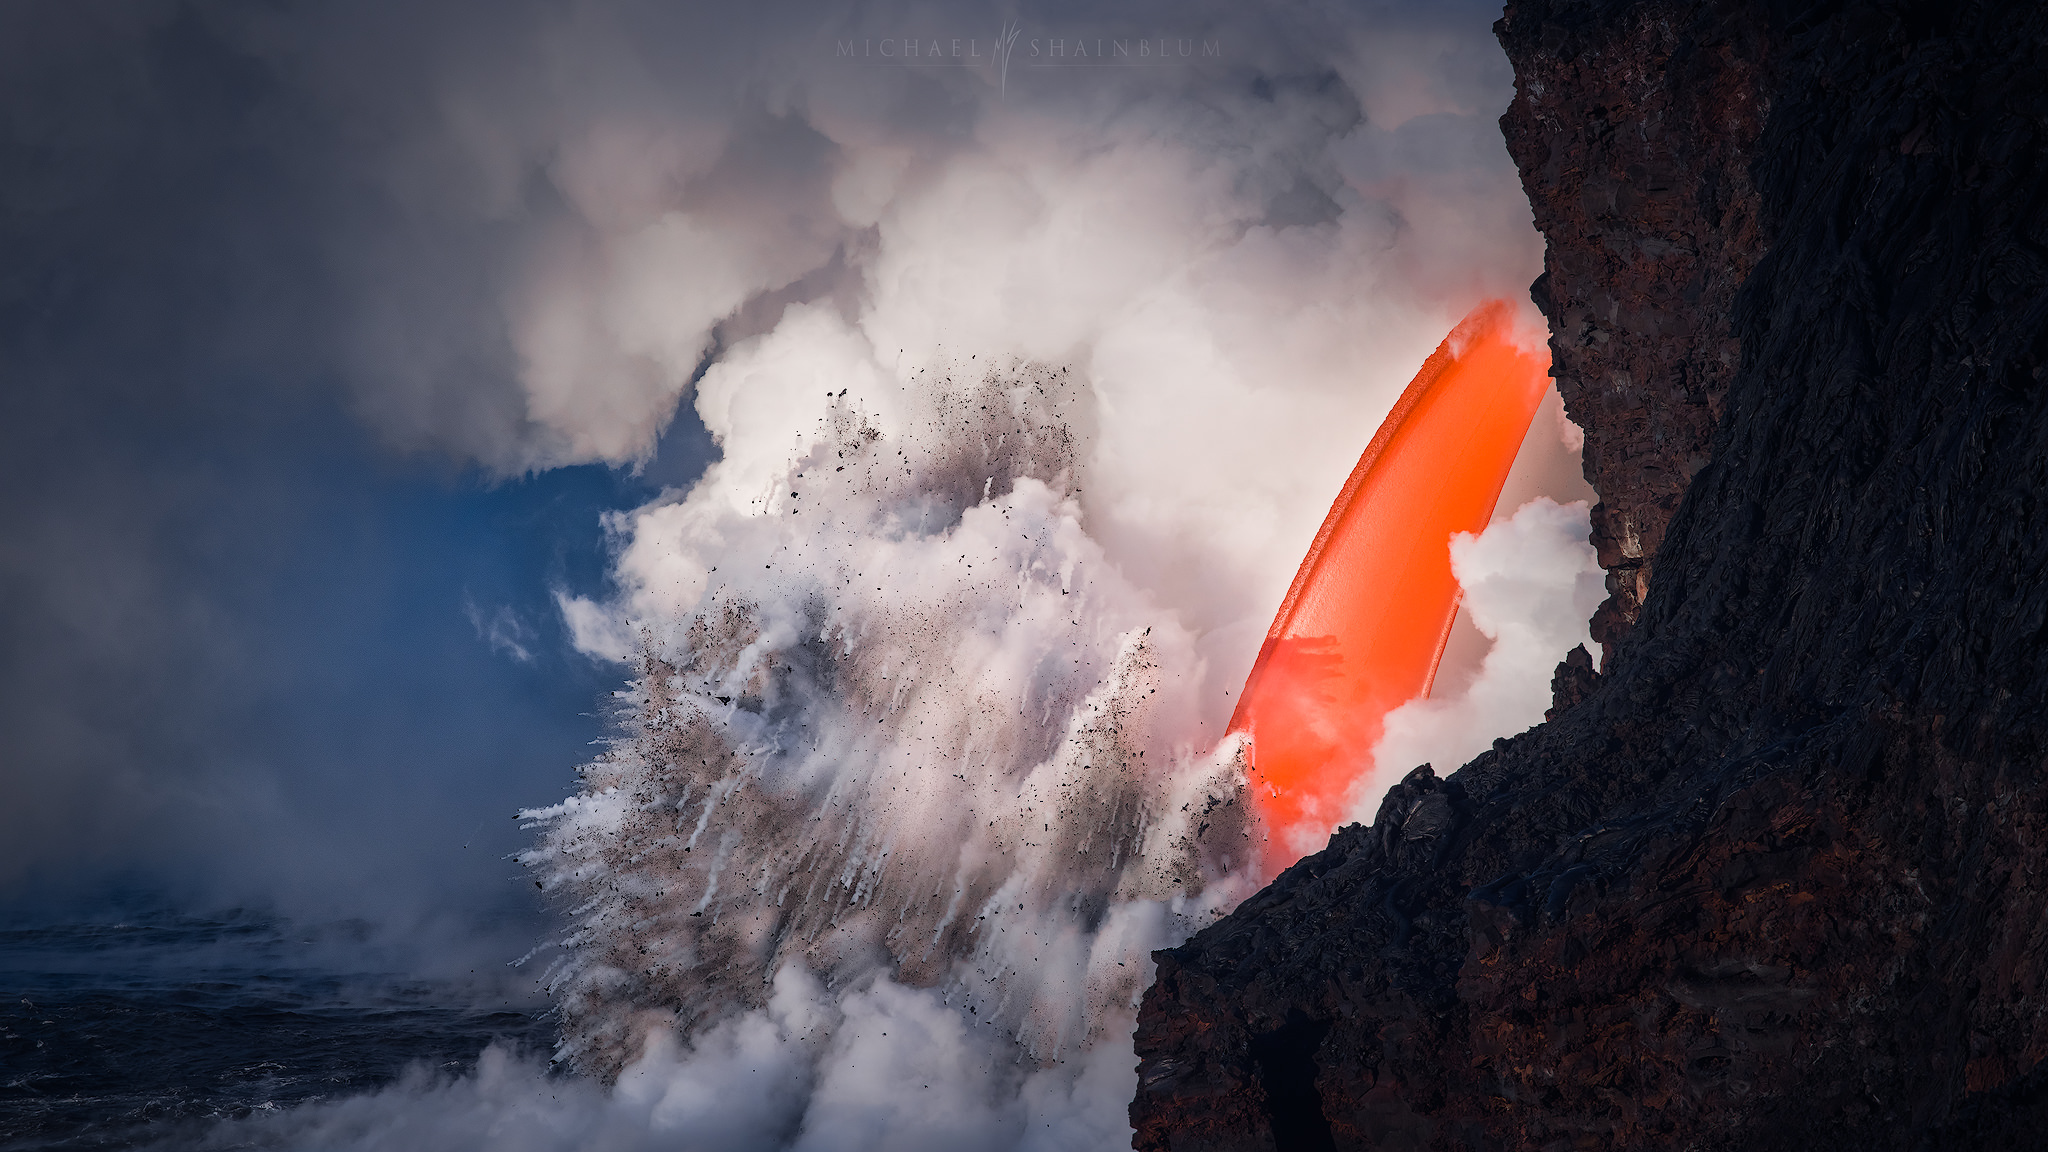 Cascade of Lava by Michael Shainblum